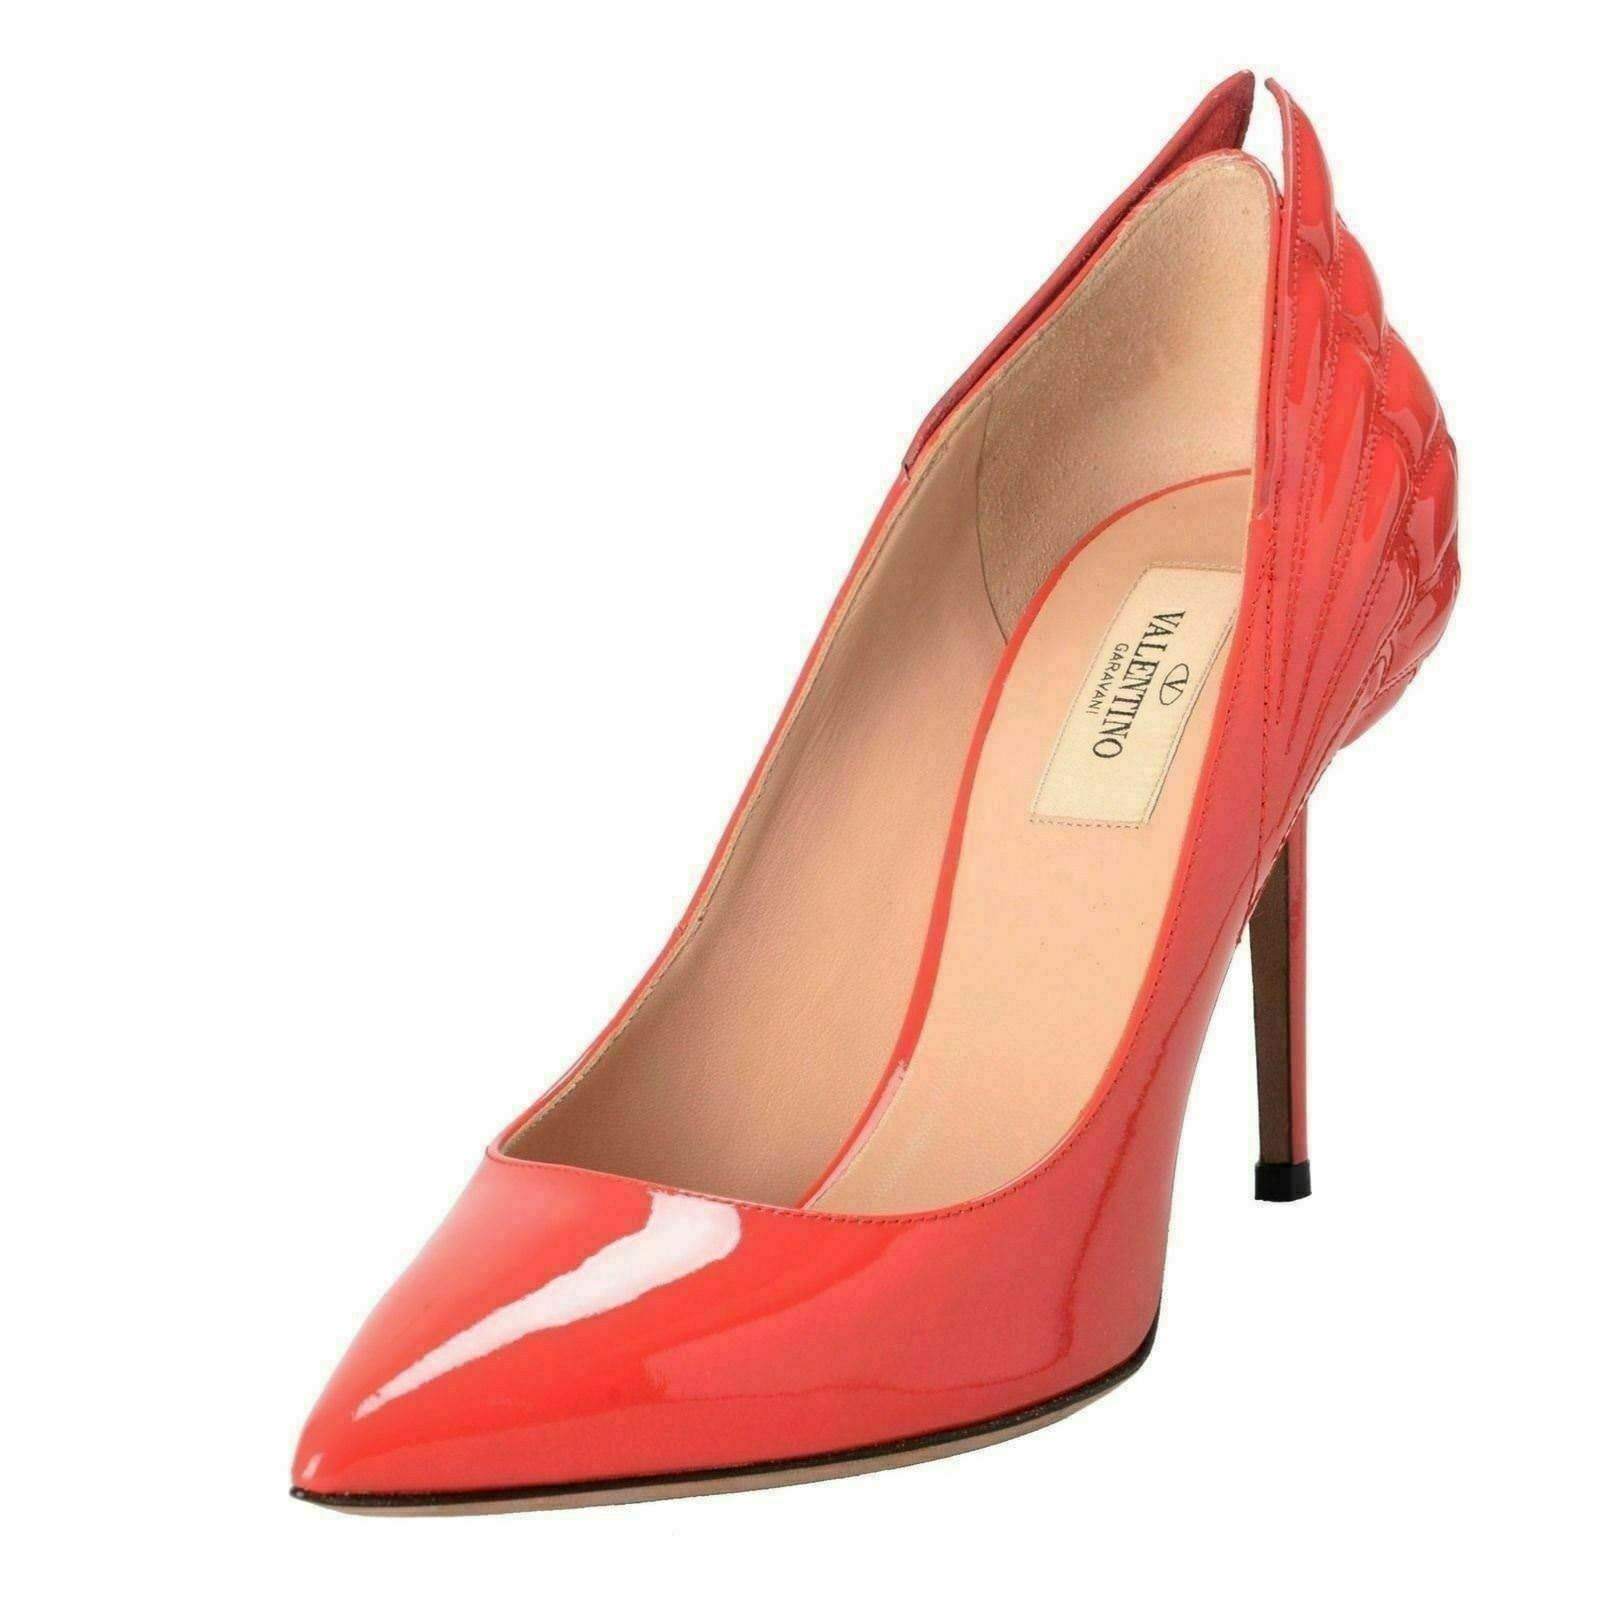 Valentino Garavani Women's High Heels Pointed Toe Pumps Shoes US 7.5 IT 38.5